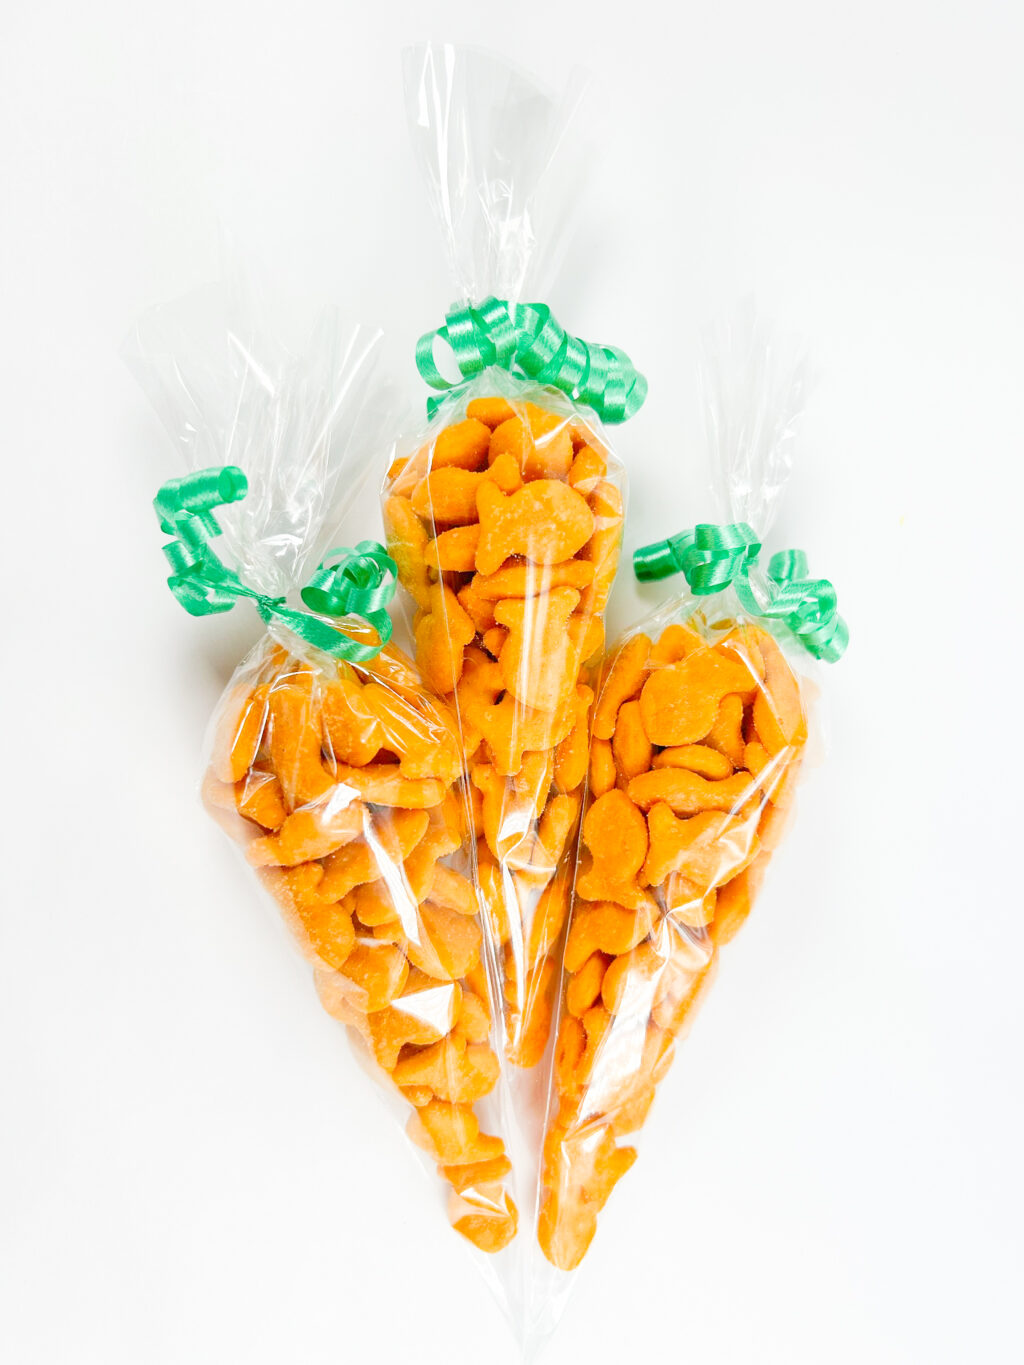 goldfish carrot treat bags on white table